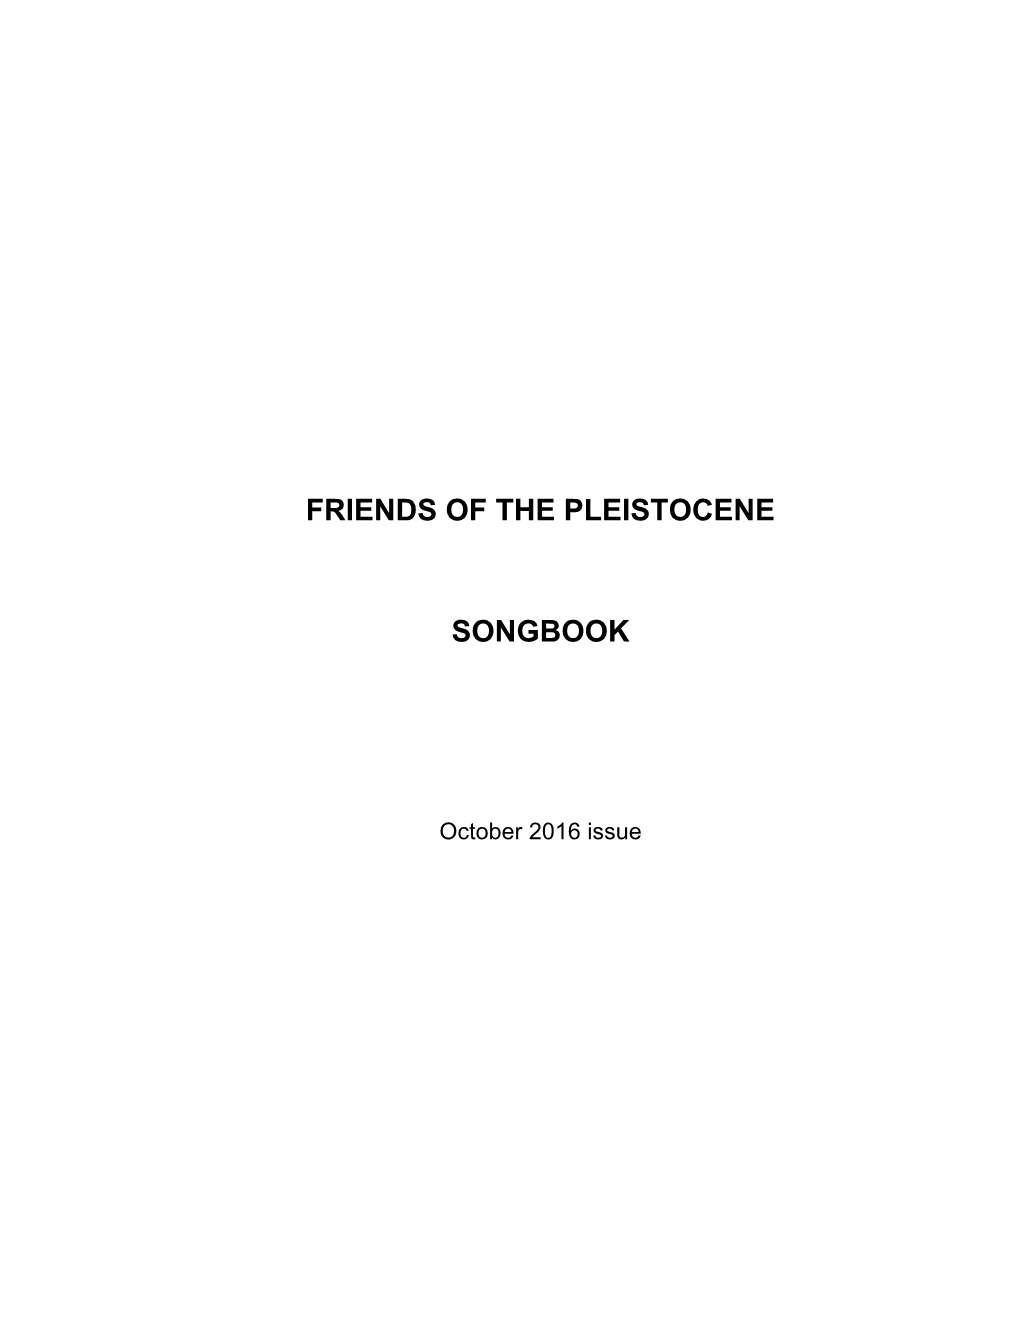 Friends of the Pleistocene Songbook